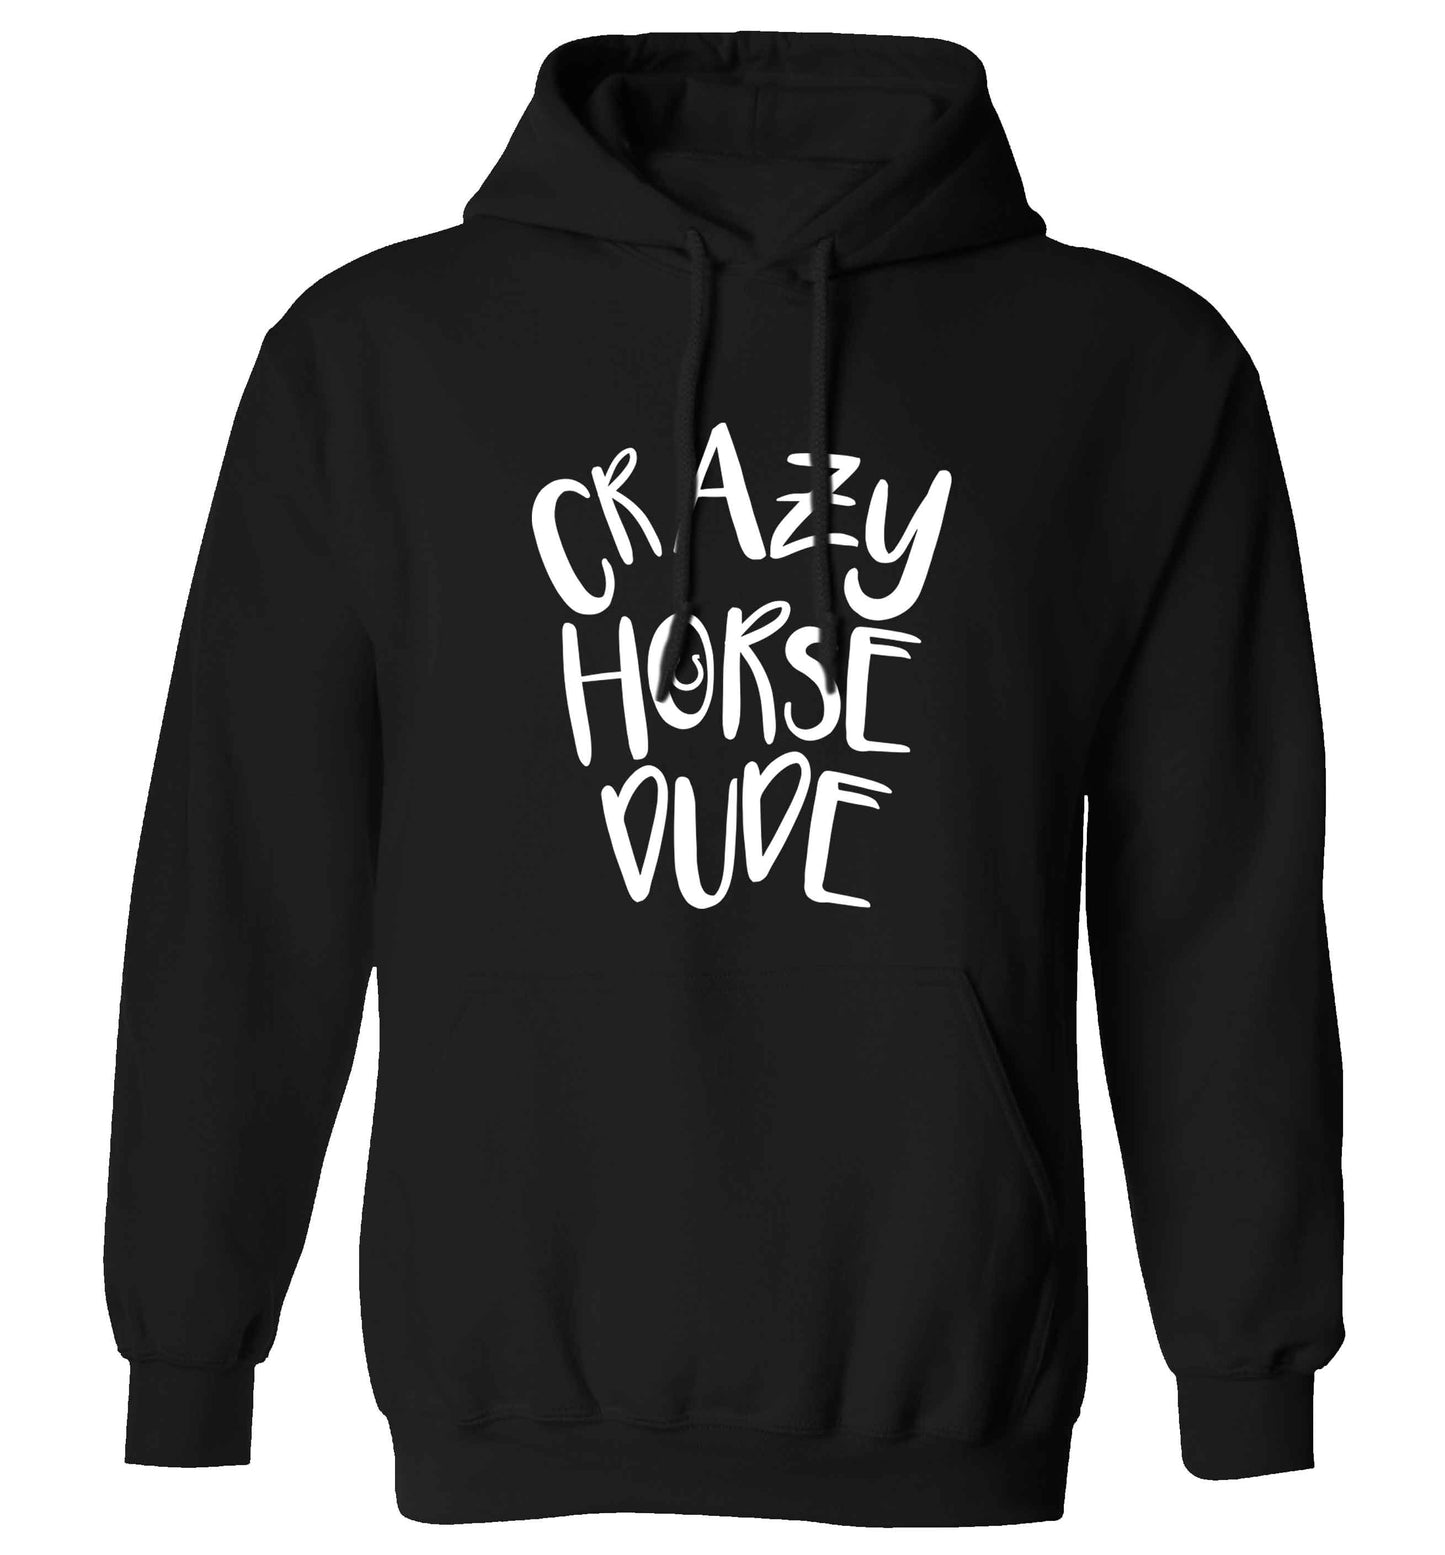 Crazy horse dude adults unisex black hoodie 2XL